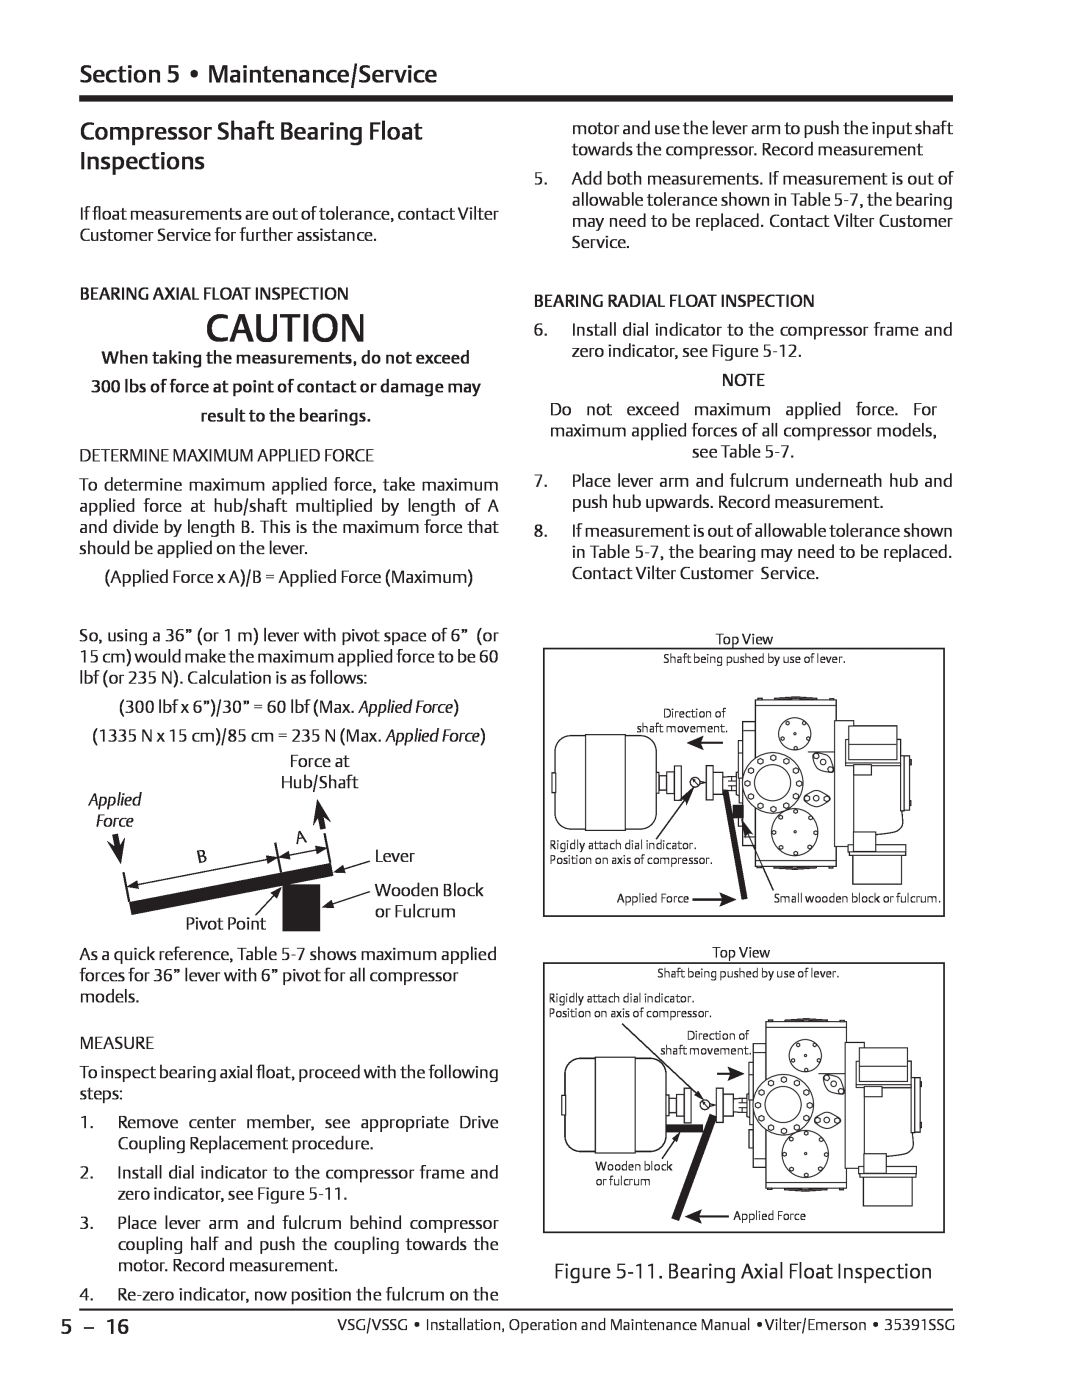 Emerson VSSG, VSG manual Compressor Shaft Bearing Float Inspections, 11. Bearing Axial Float Inspection, Maintenance/Service 